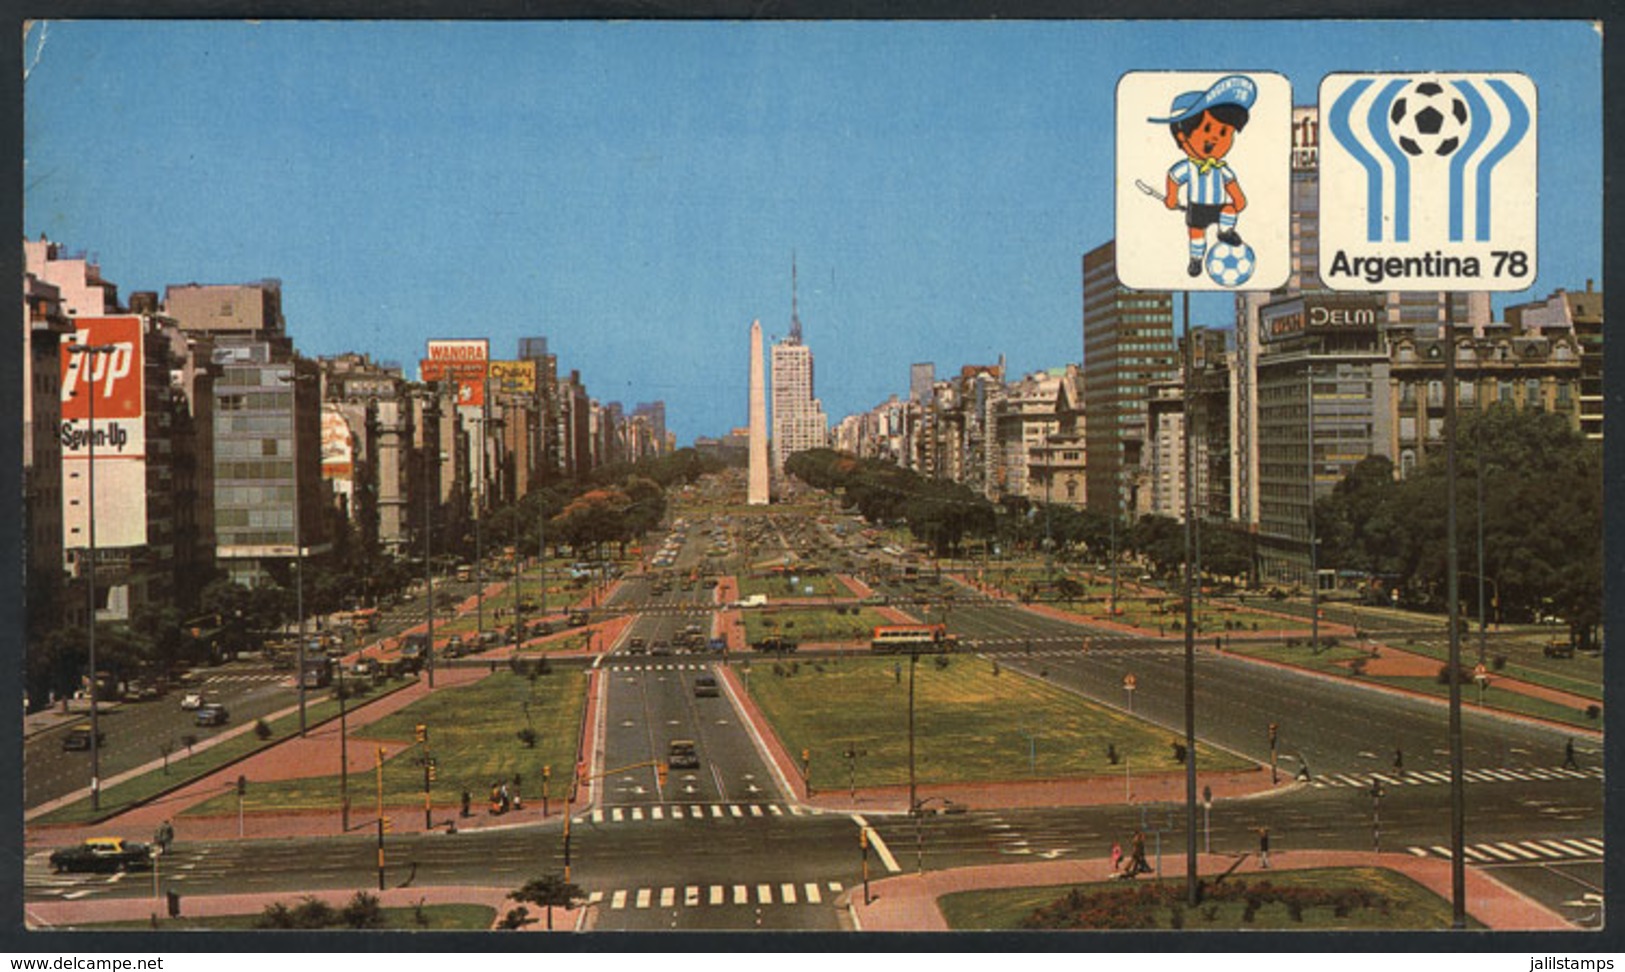 250 ARGENTINA: BUENOS AIRES: 9 De Julio Avenue, Argentina 78 Football World Cup, Used, VF - Argentina